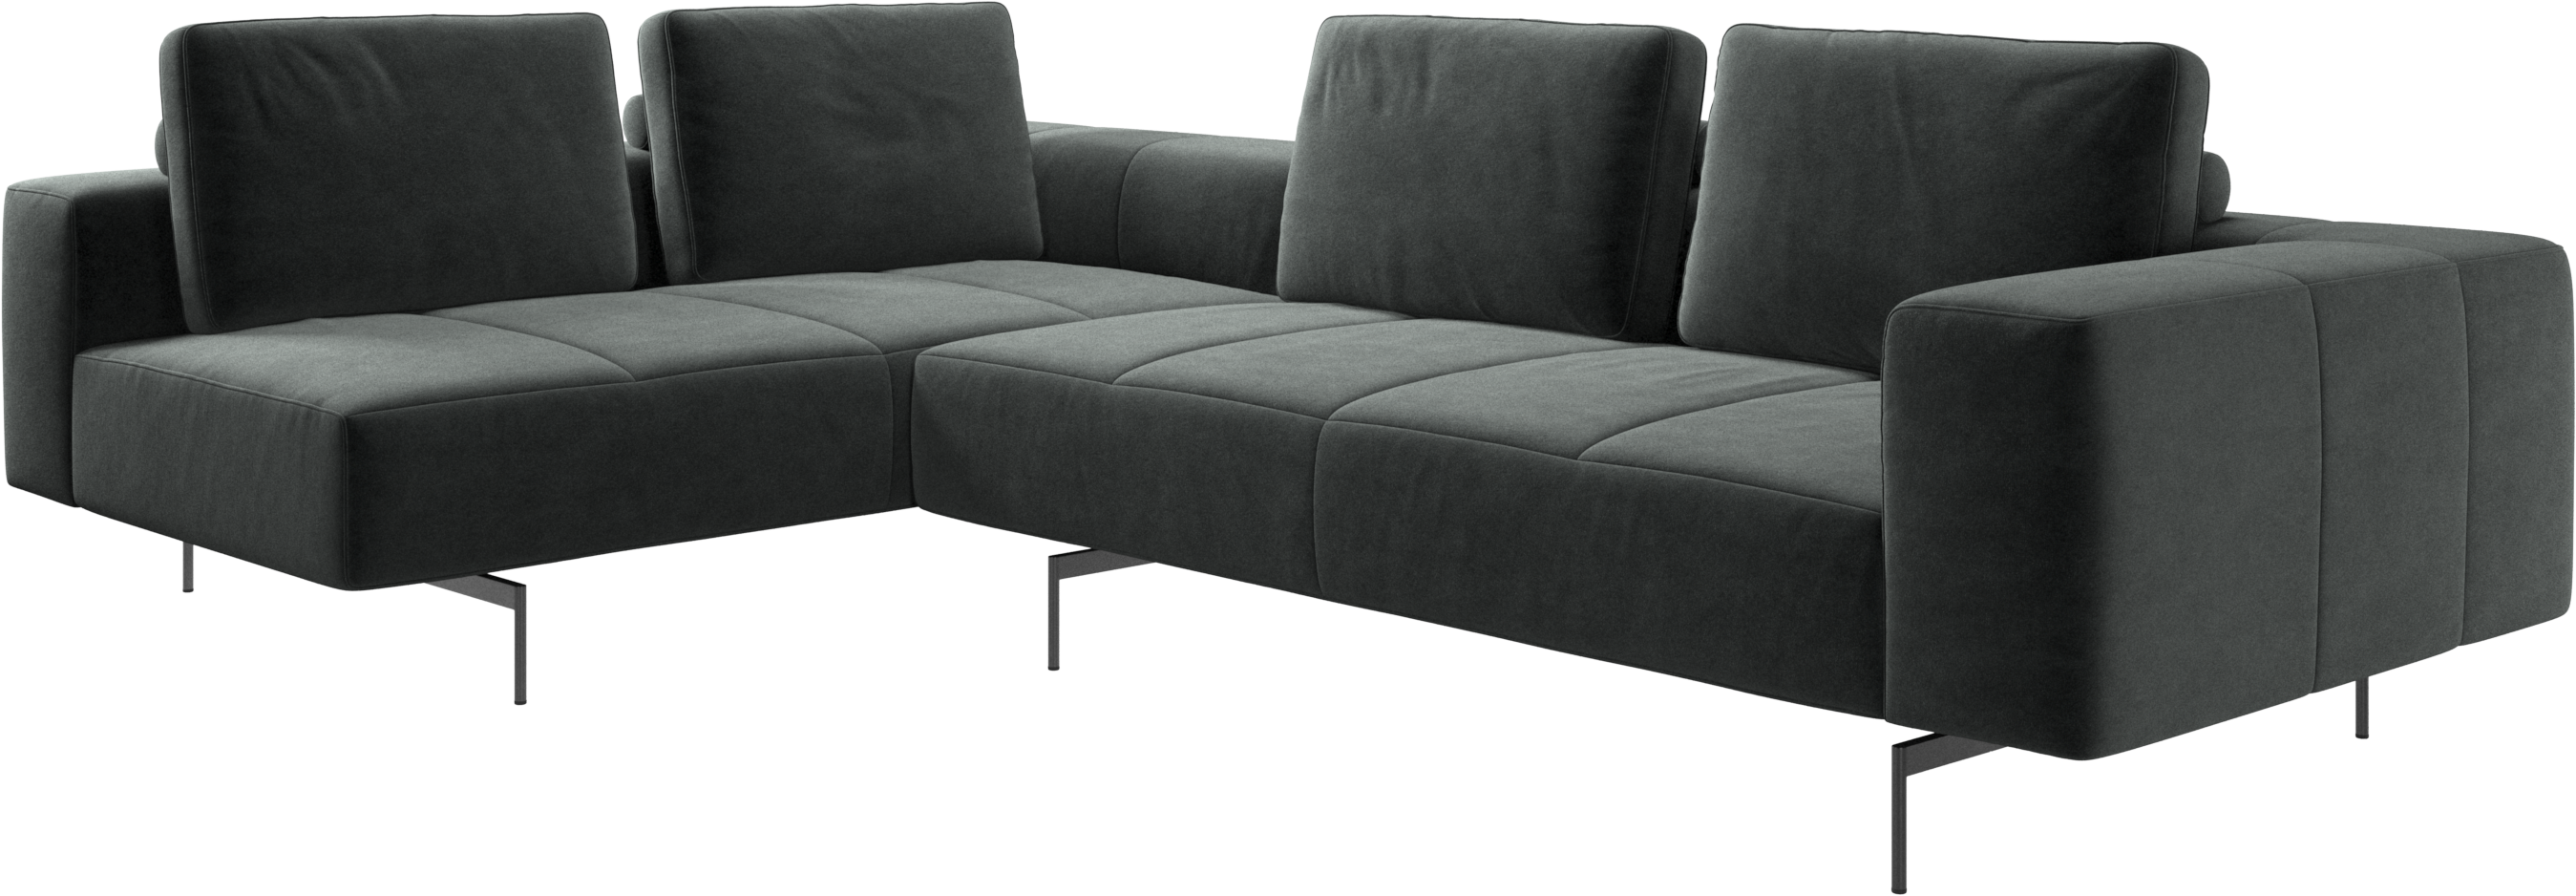 Amsterdam corner sofa with lounging unit | BoConcept